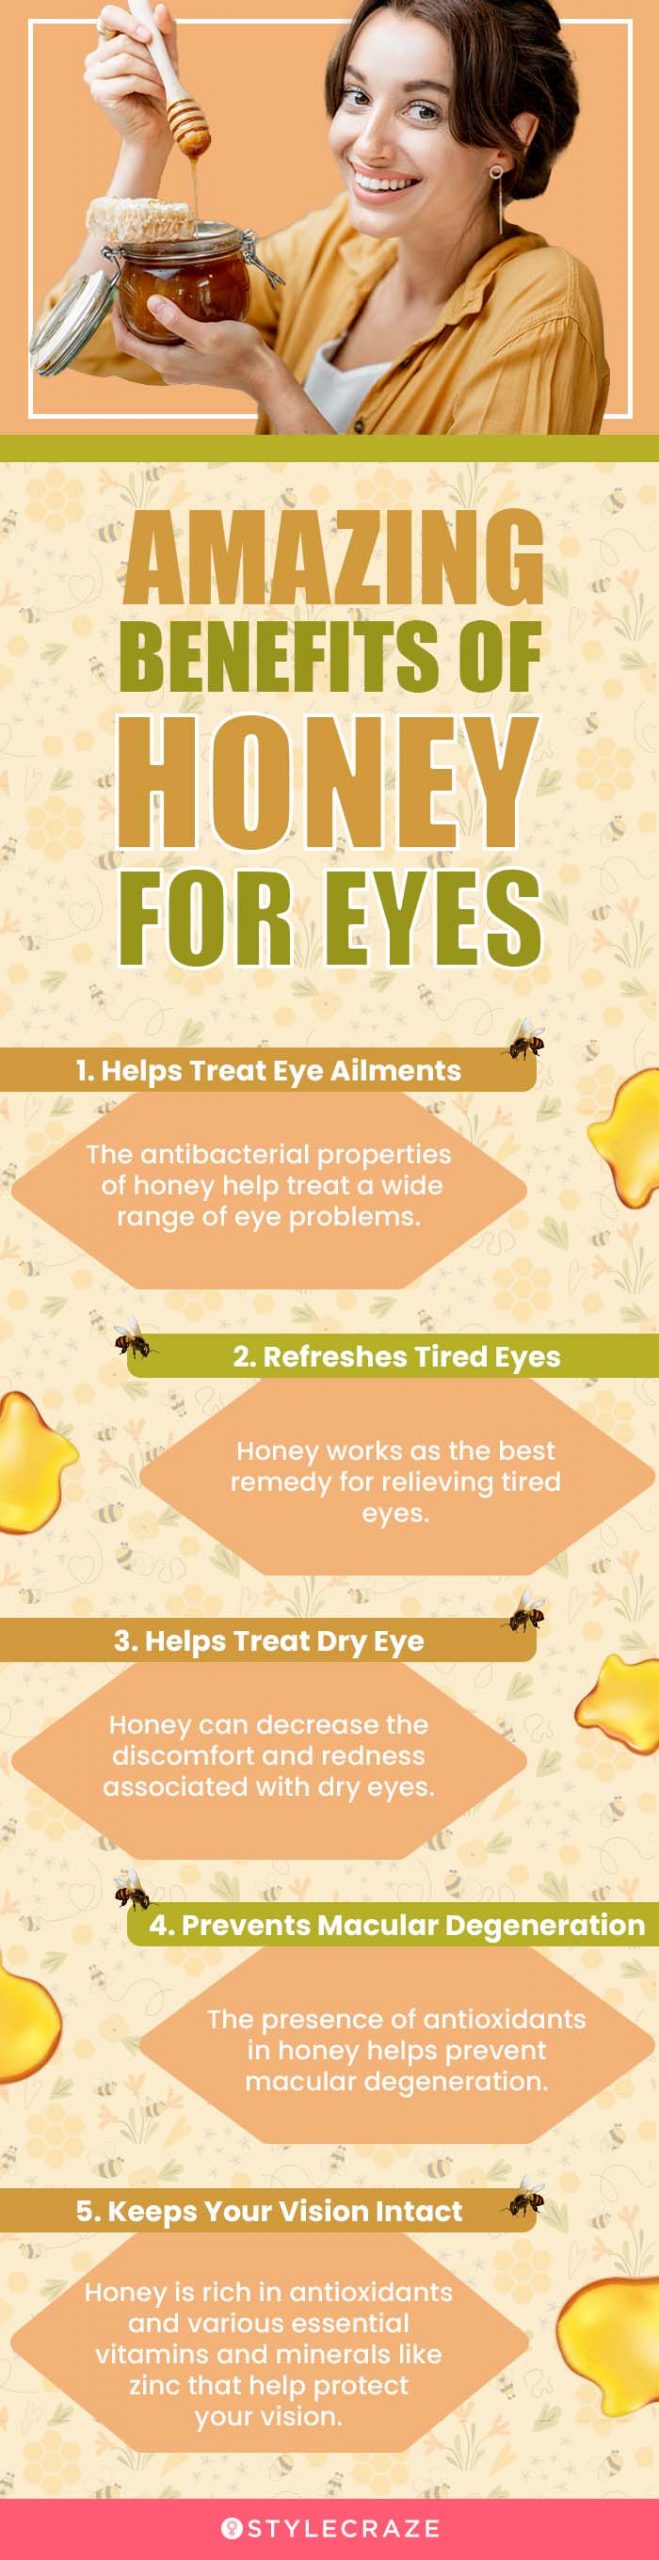 amazing benefits of honey for eyes (infographic)